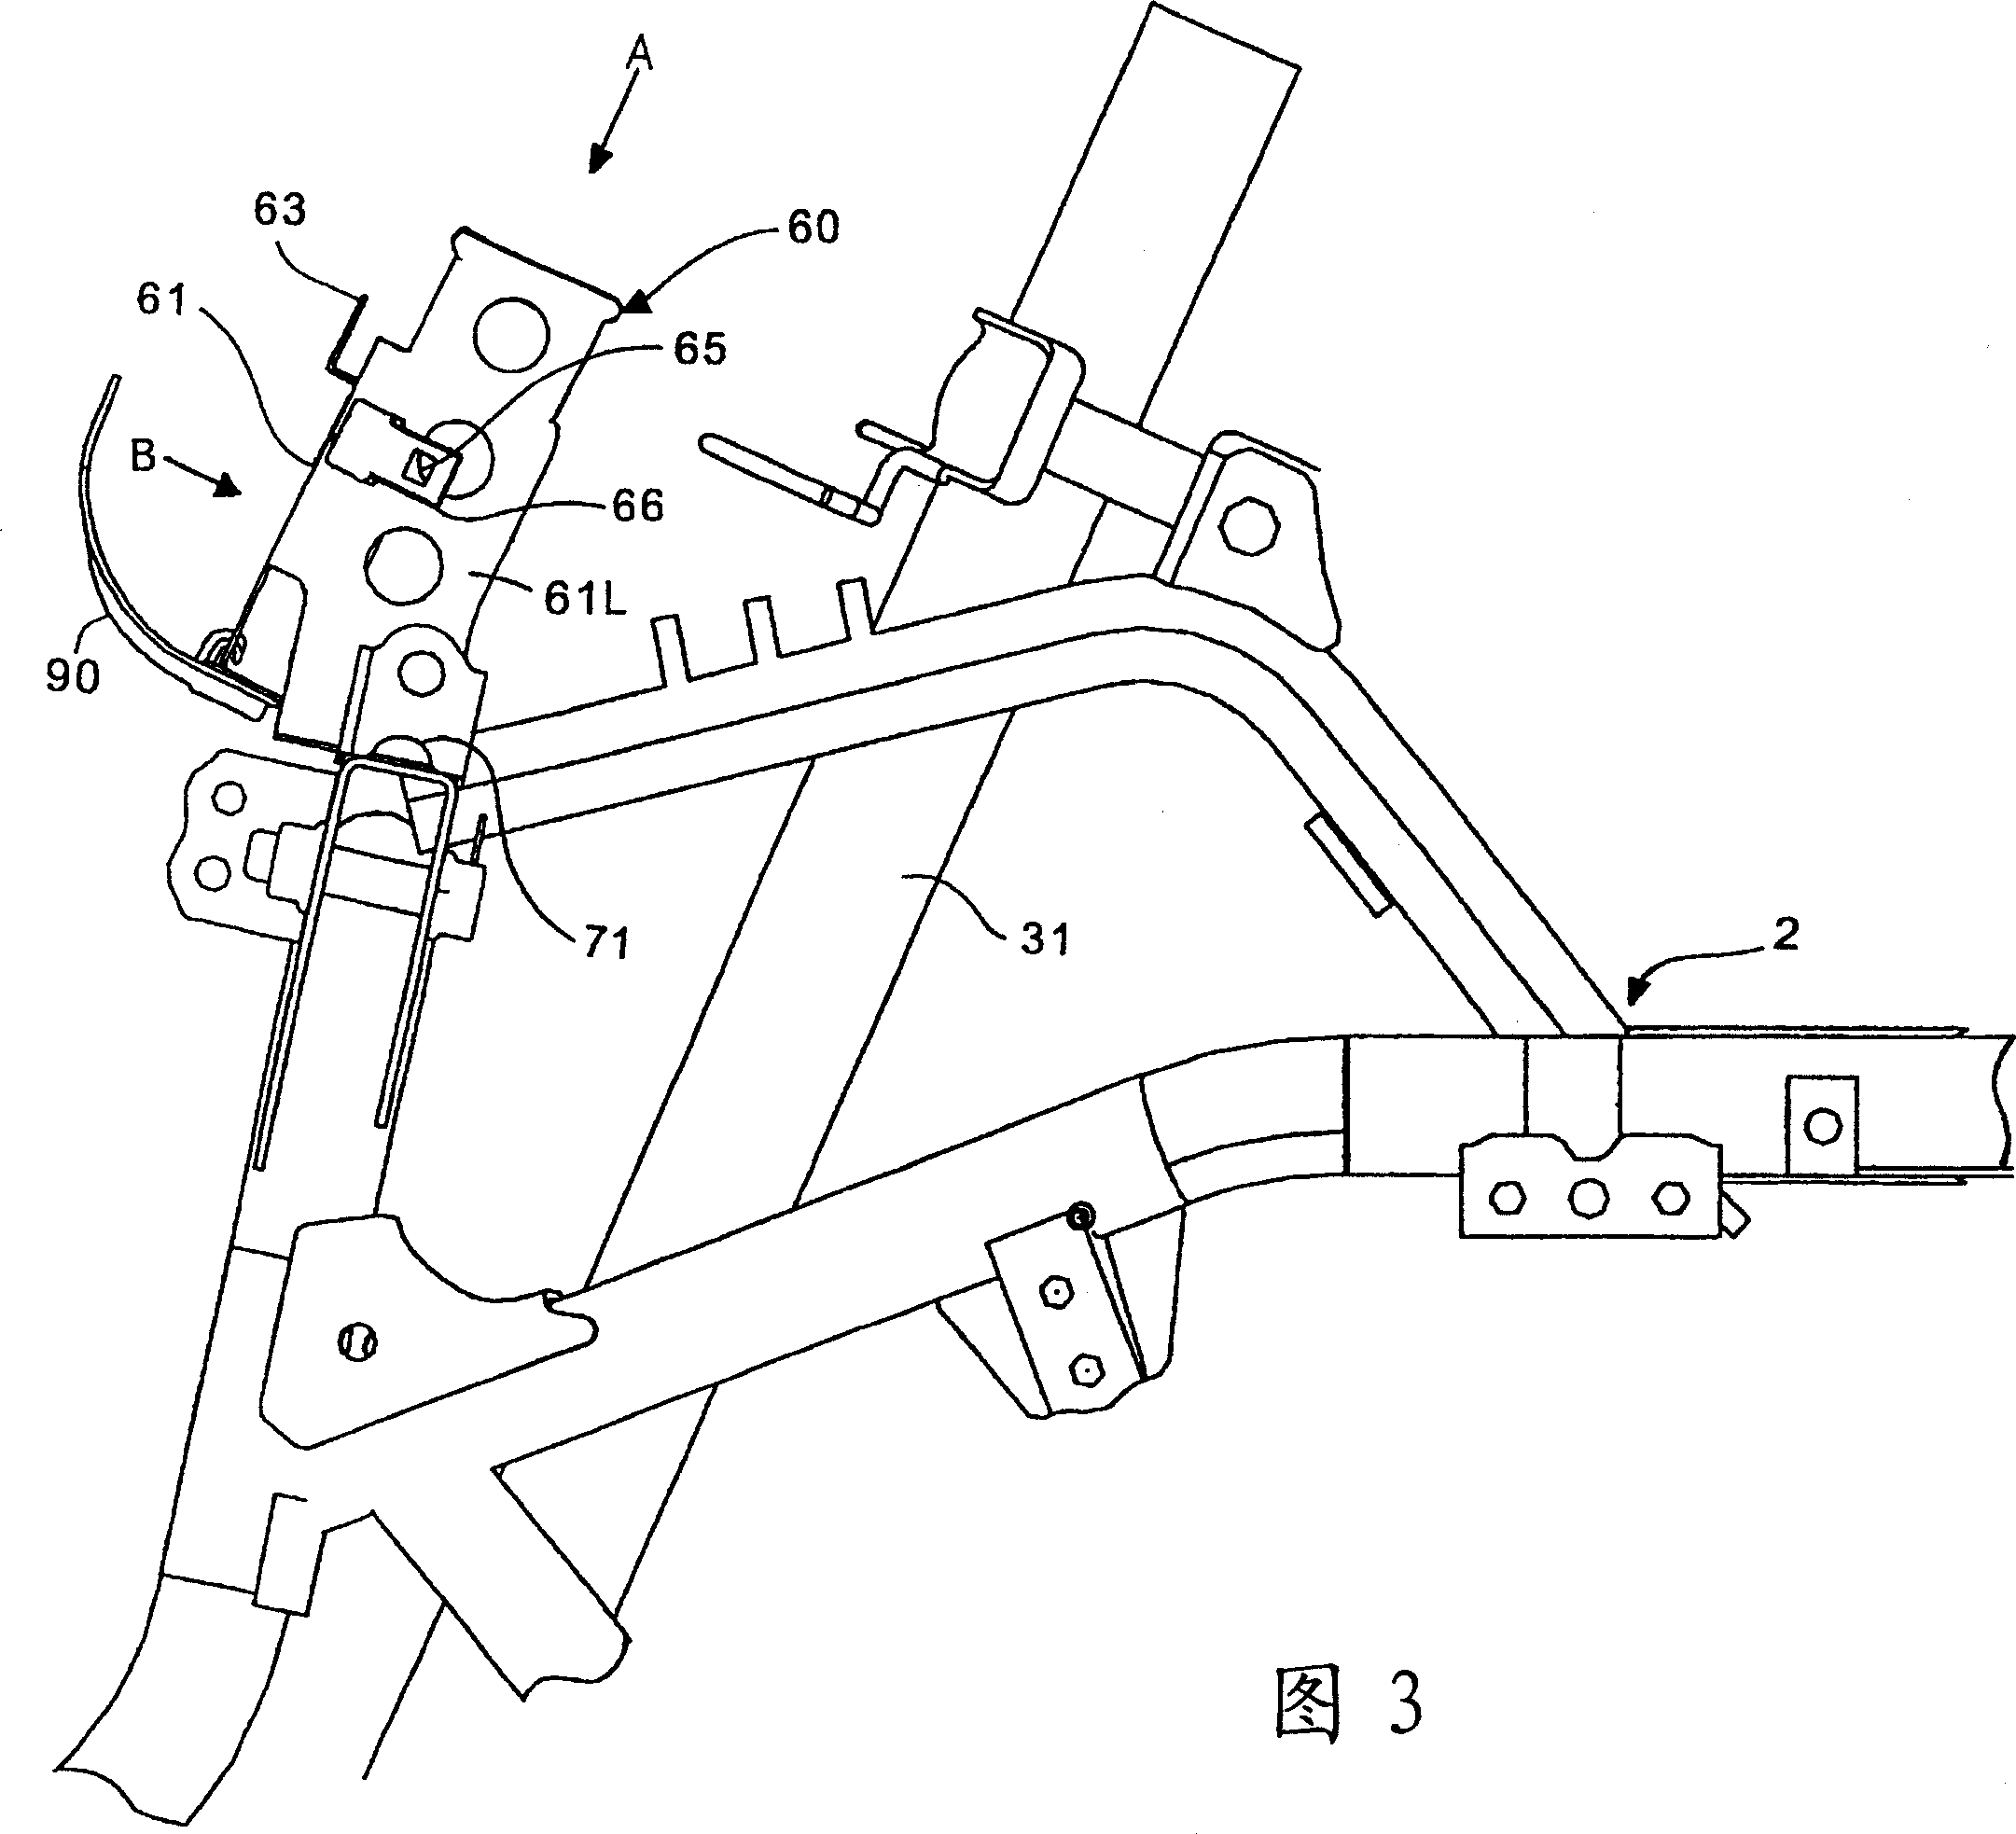 Control box mounting bracket